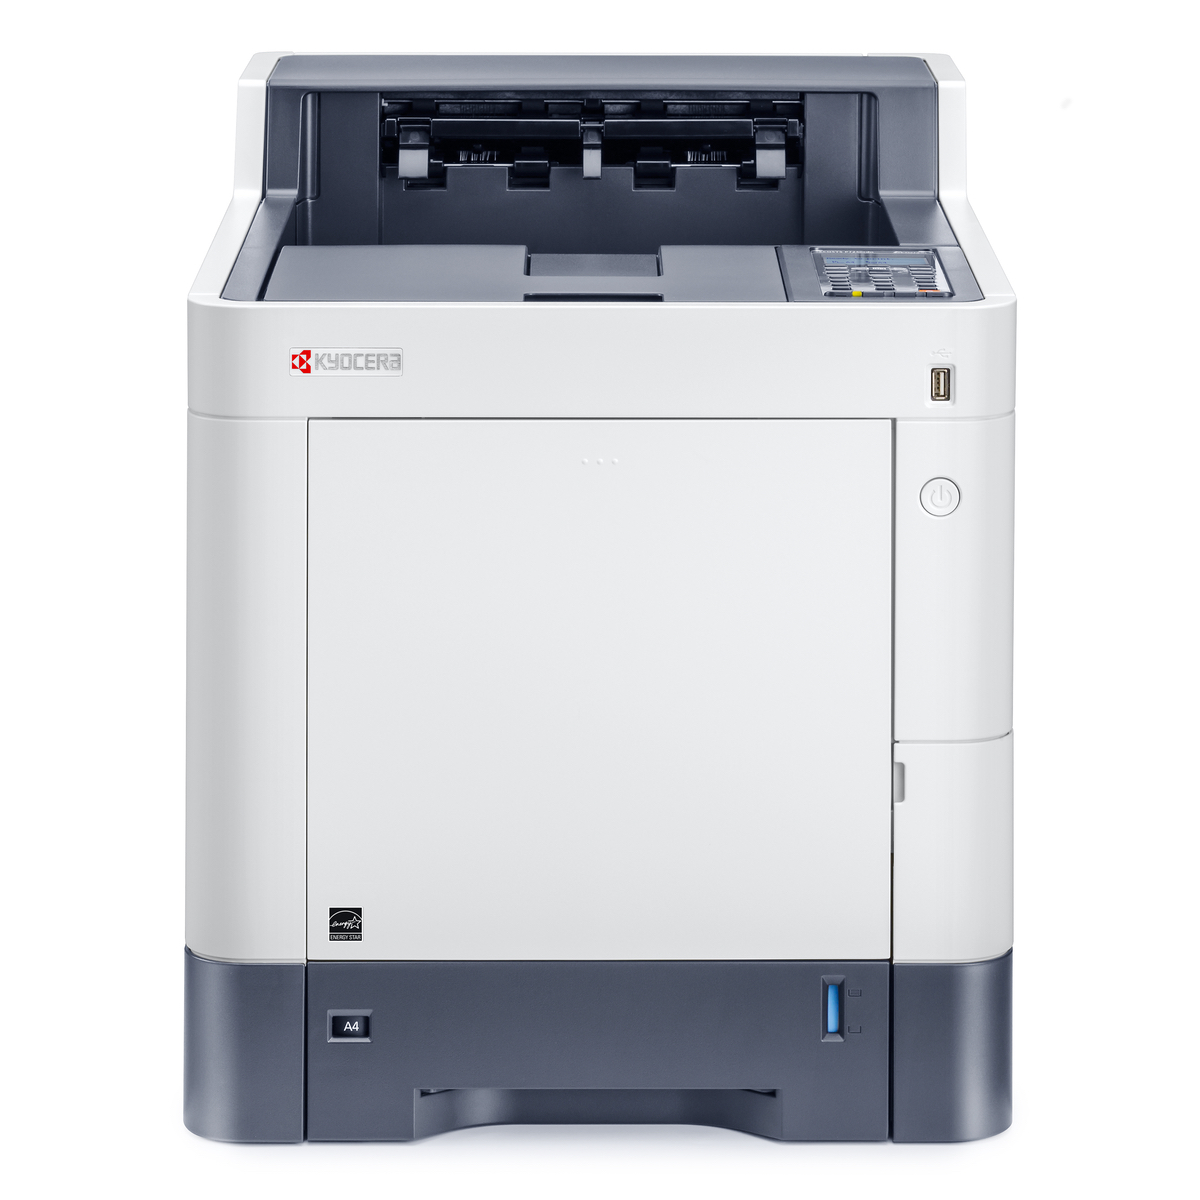 Kyocera Printers:  The Kyocera ECOSYS P7240cdn Printer